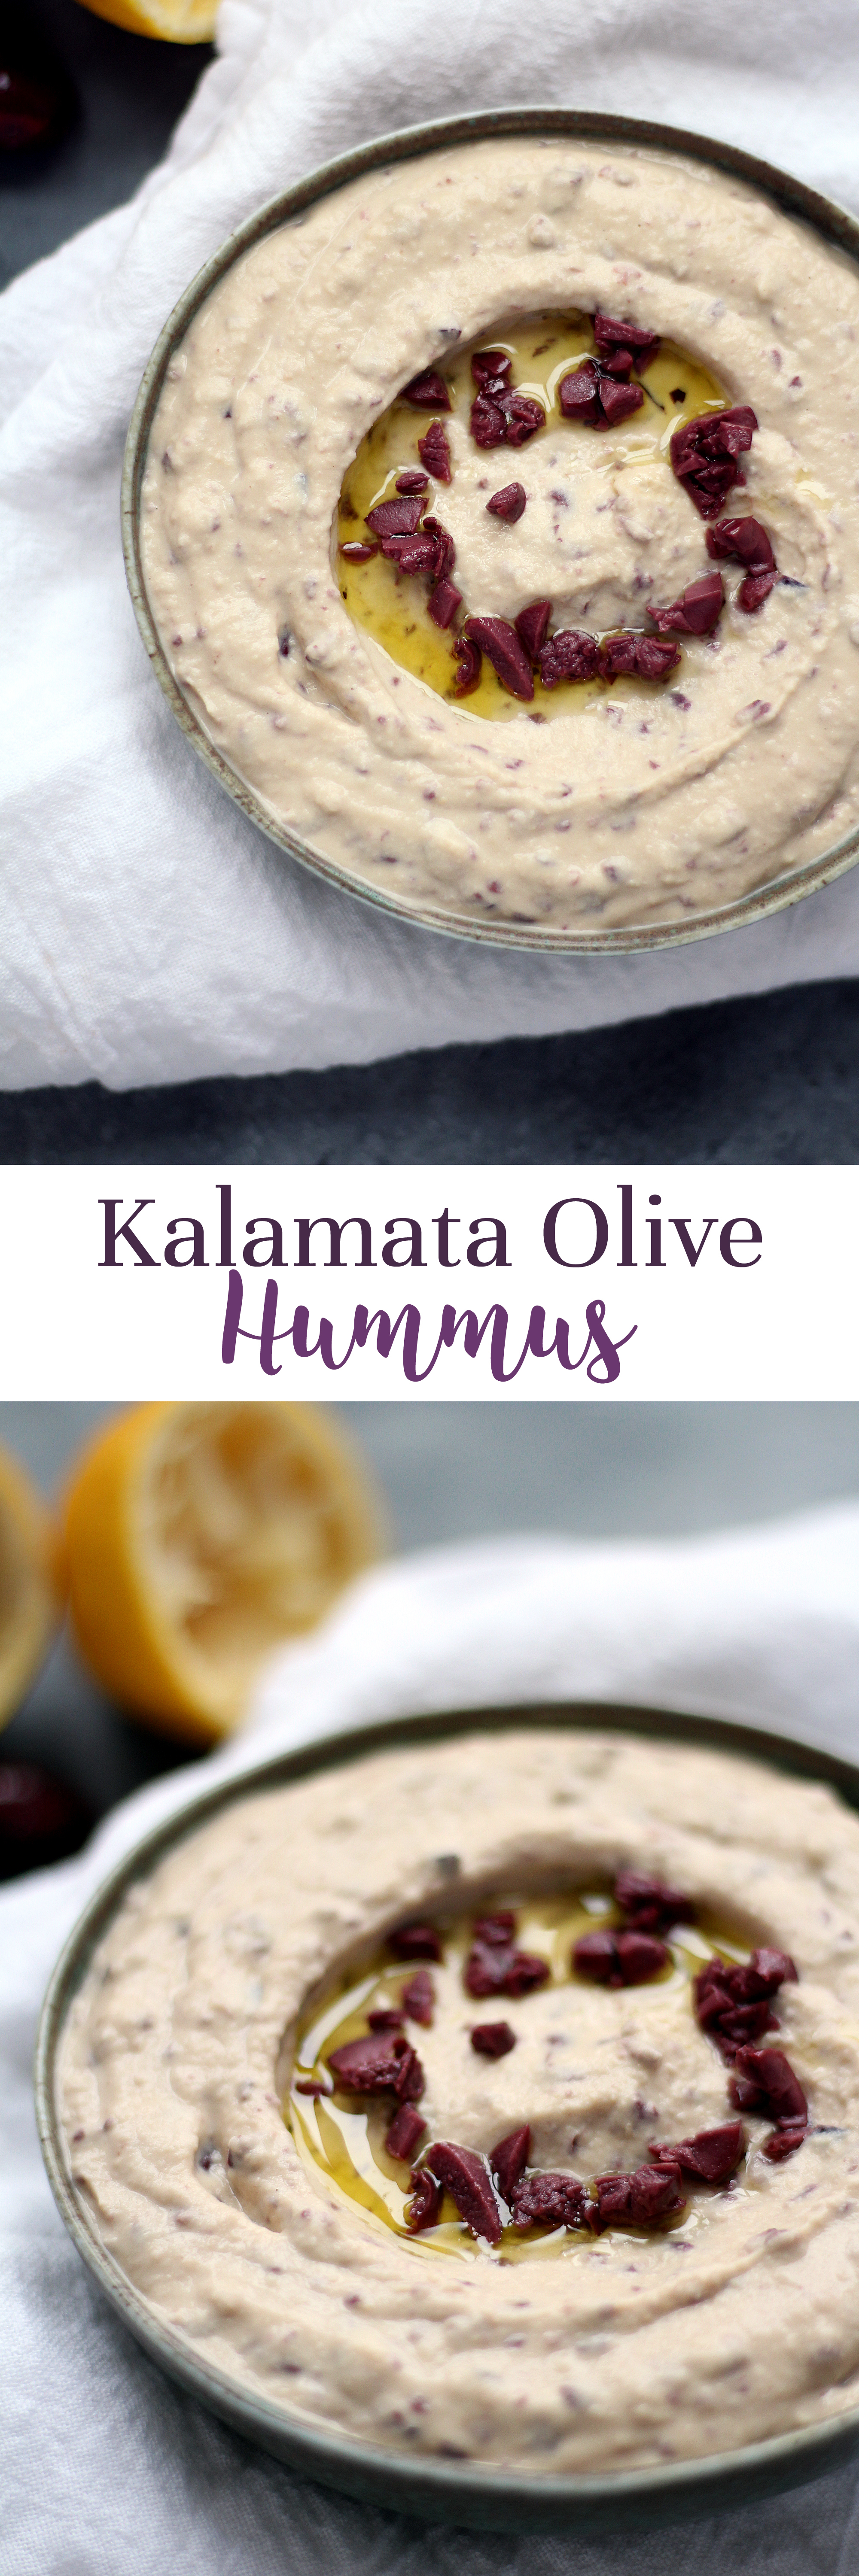 Easy kalamata olive hummus